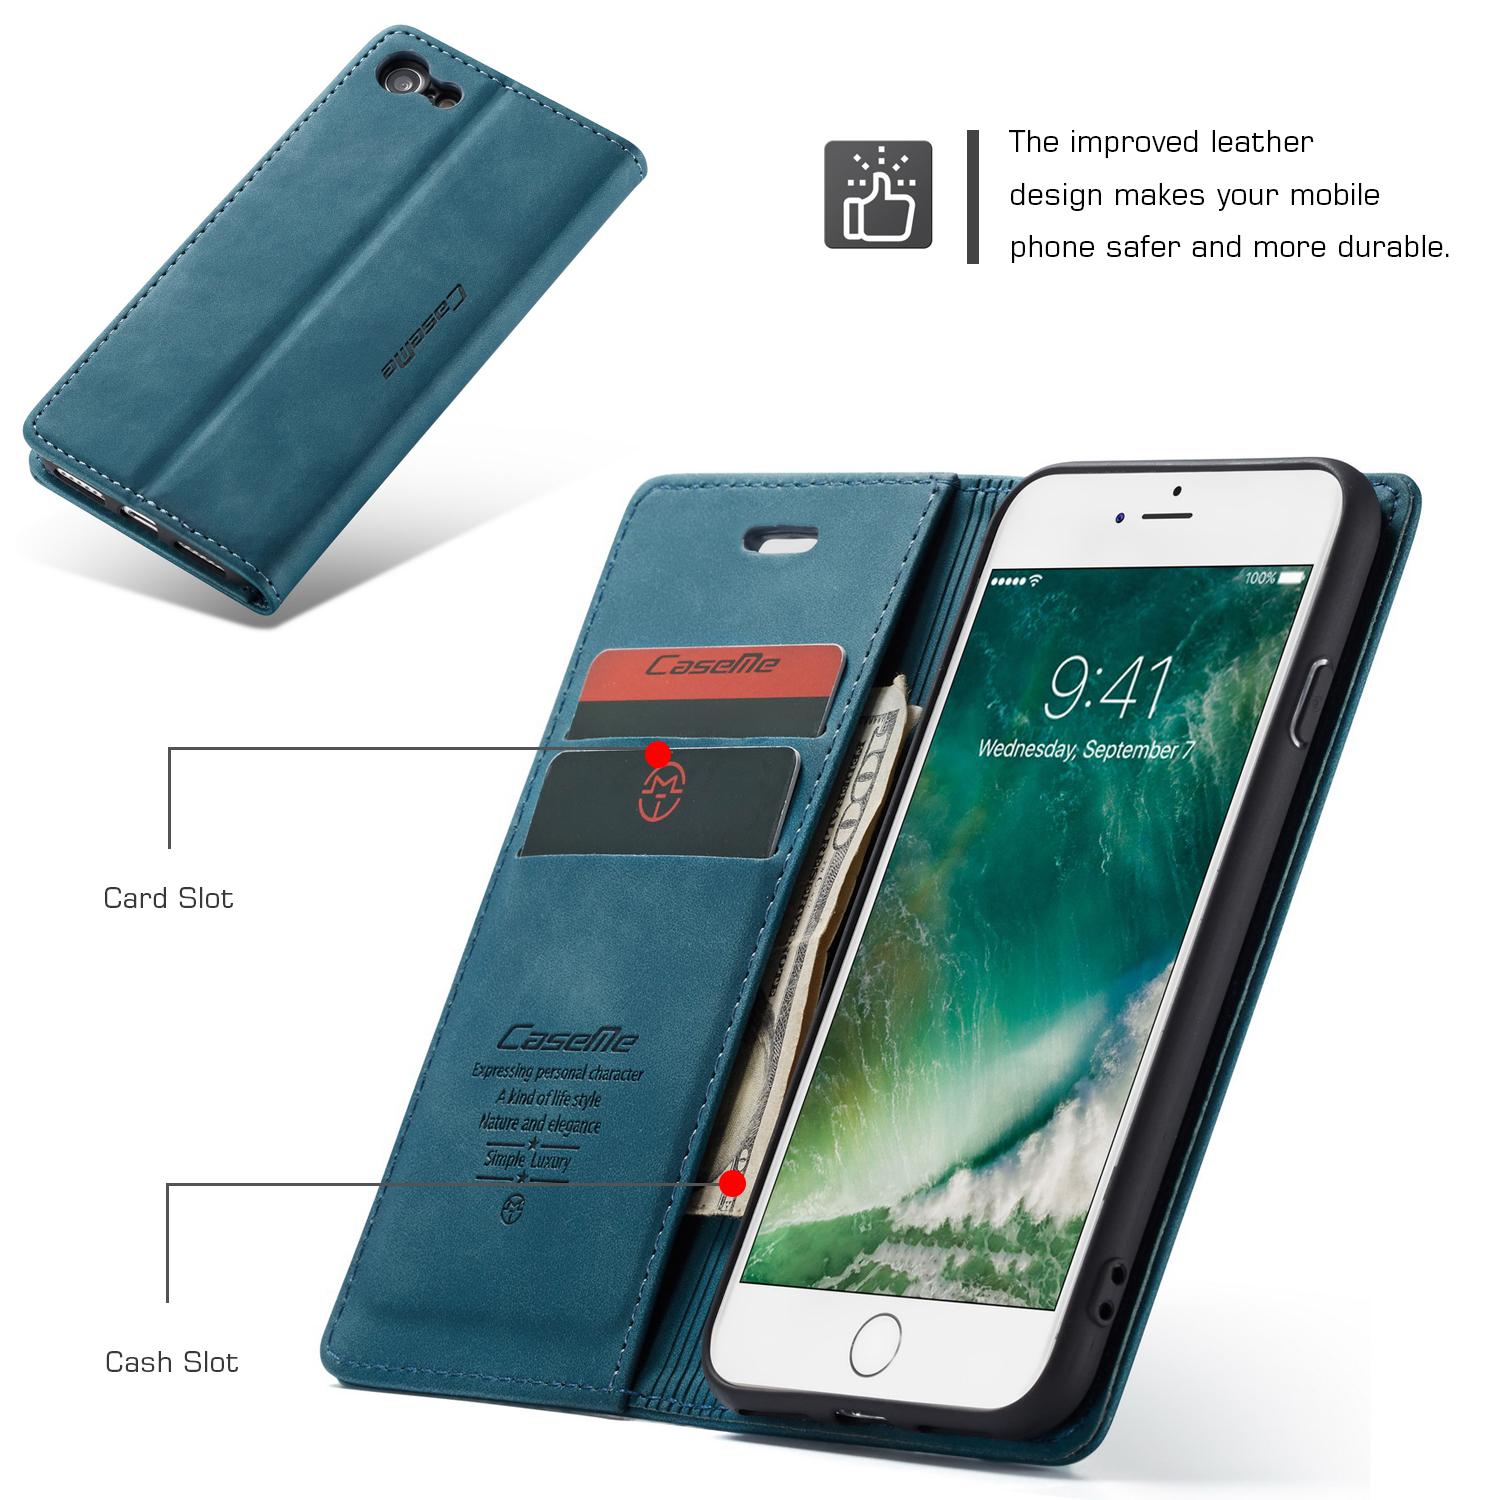 Slim Pung Etui iPhone SE (2020) blå